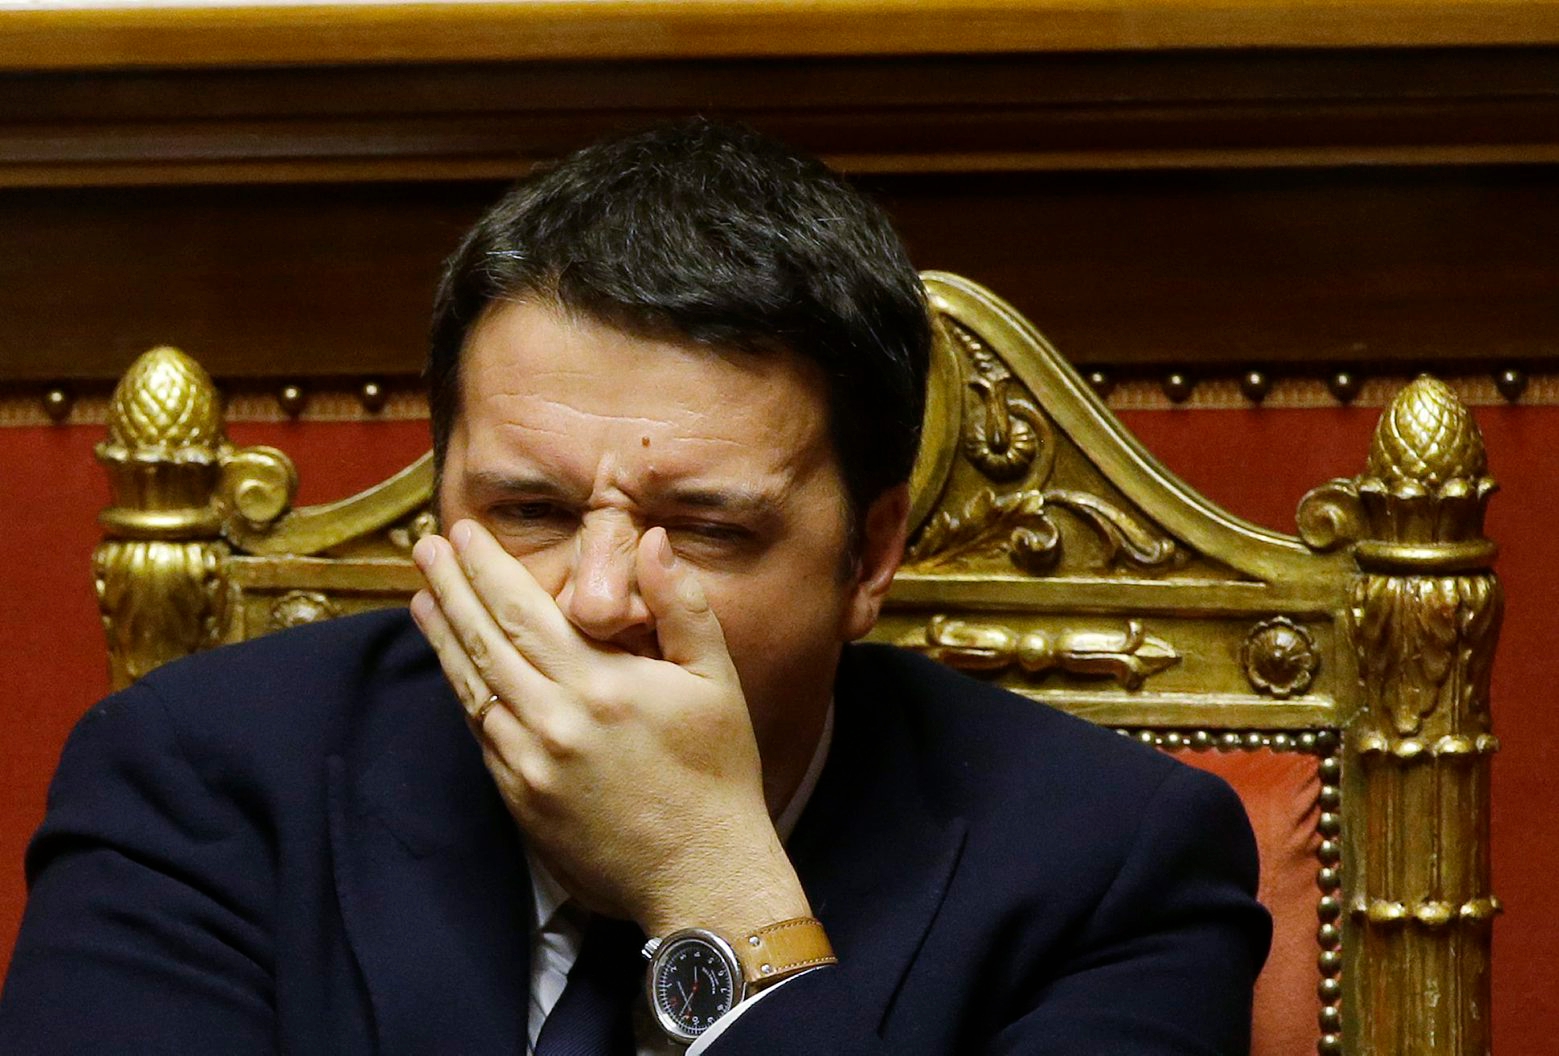 Italian Prime minister Matteo Renzi yawns during a debate at the Senate in Rome, Tuesday, Dec. 16, 2014. (AP Photo/Gregorio Borgia) Italy  Politics